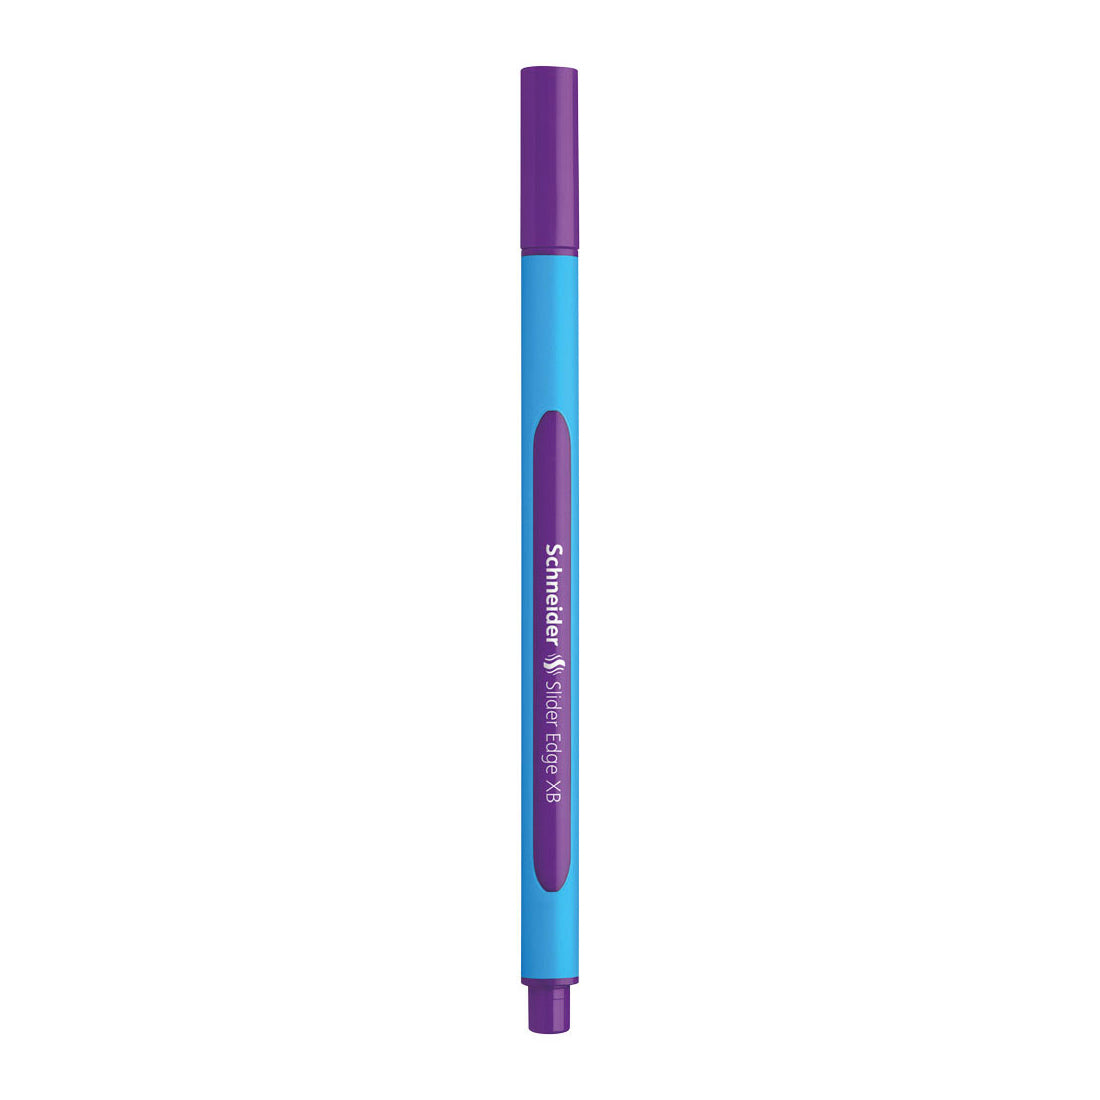 Edge Ballpoint Pen XB, Box of 10#ink-colour_violet